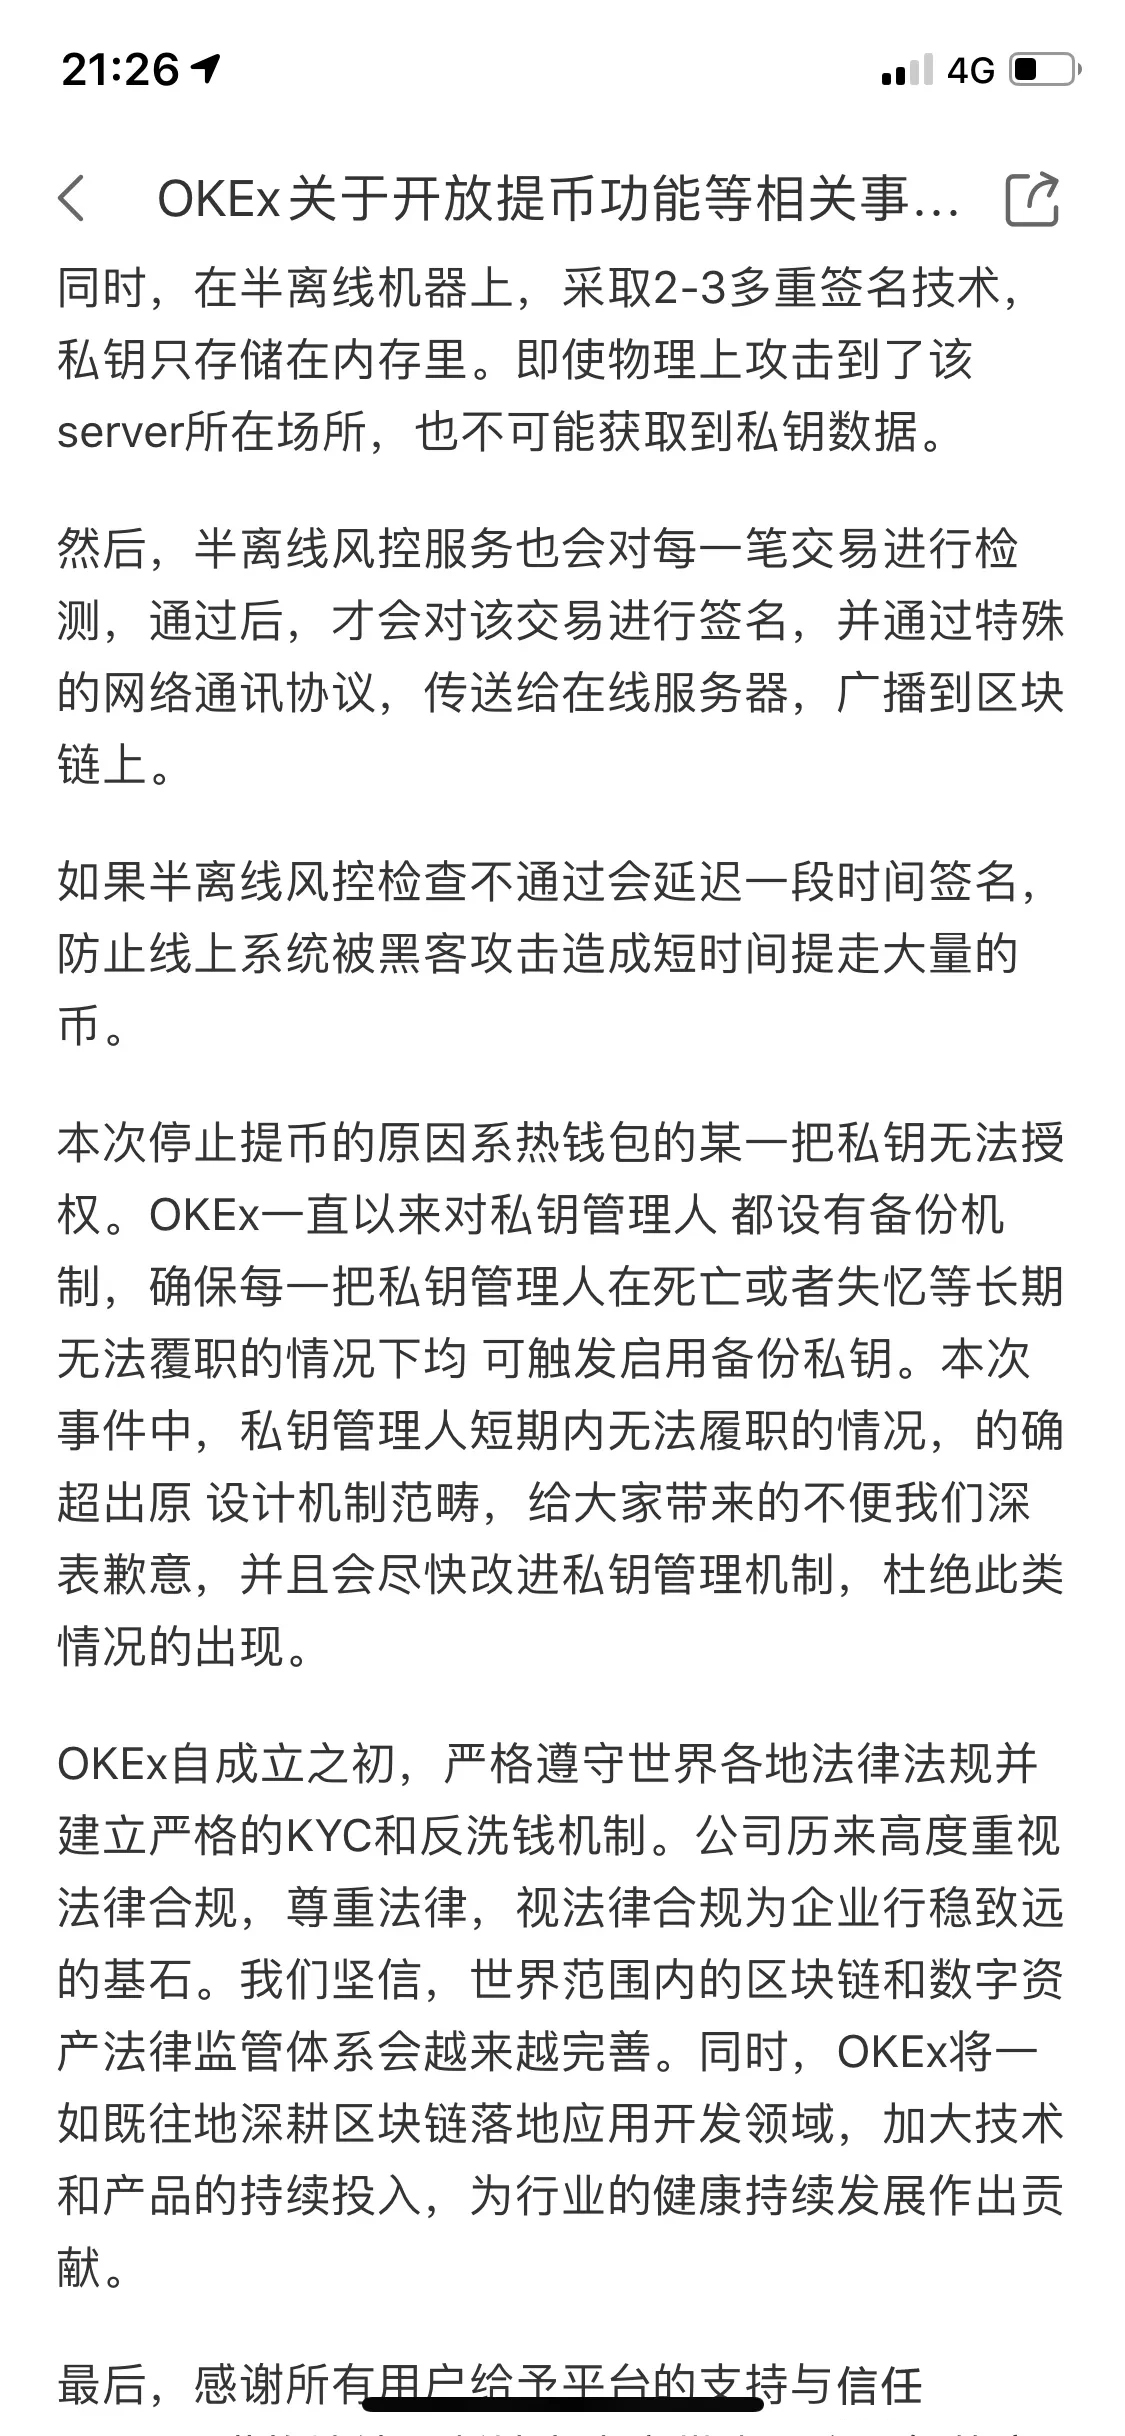 Okex官宣正式开放提币日期为11月27号。